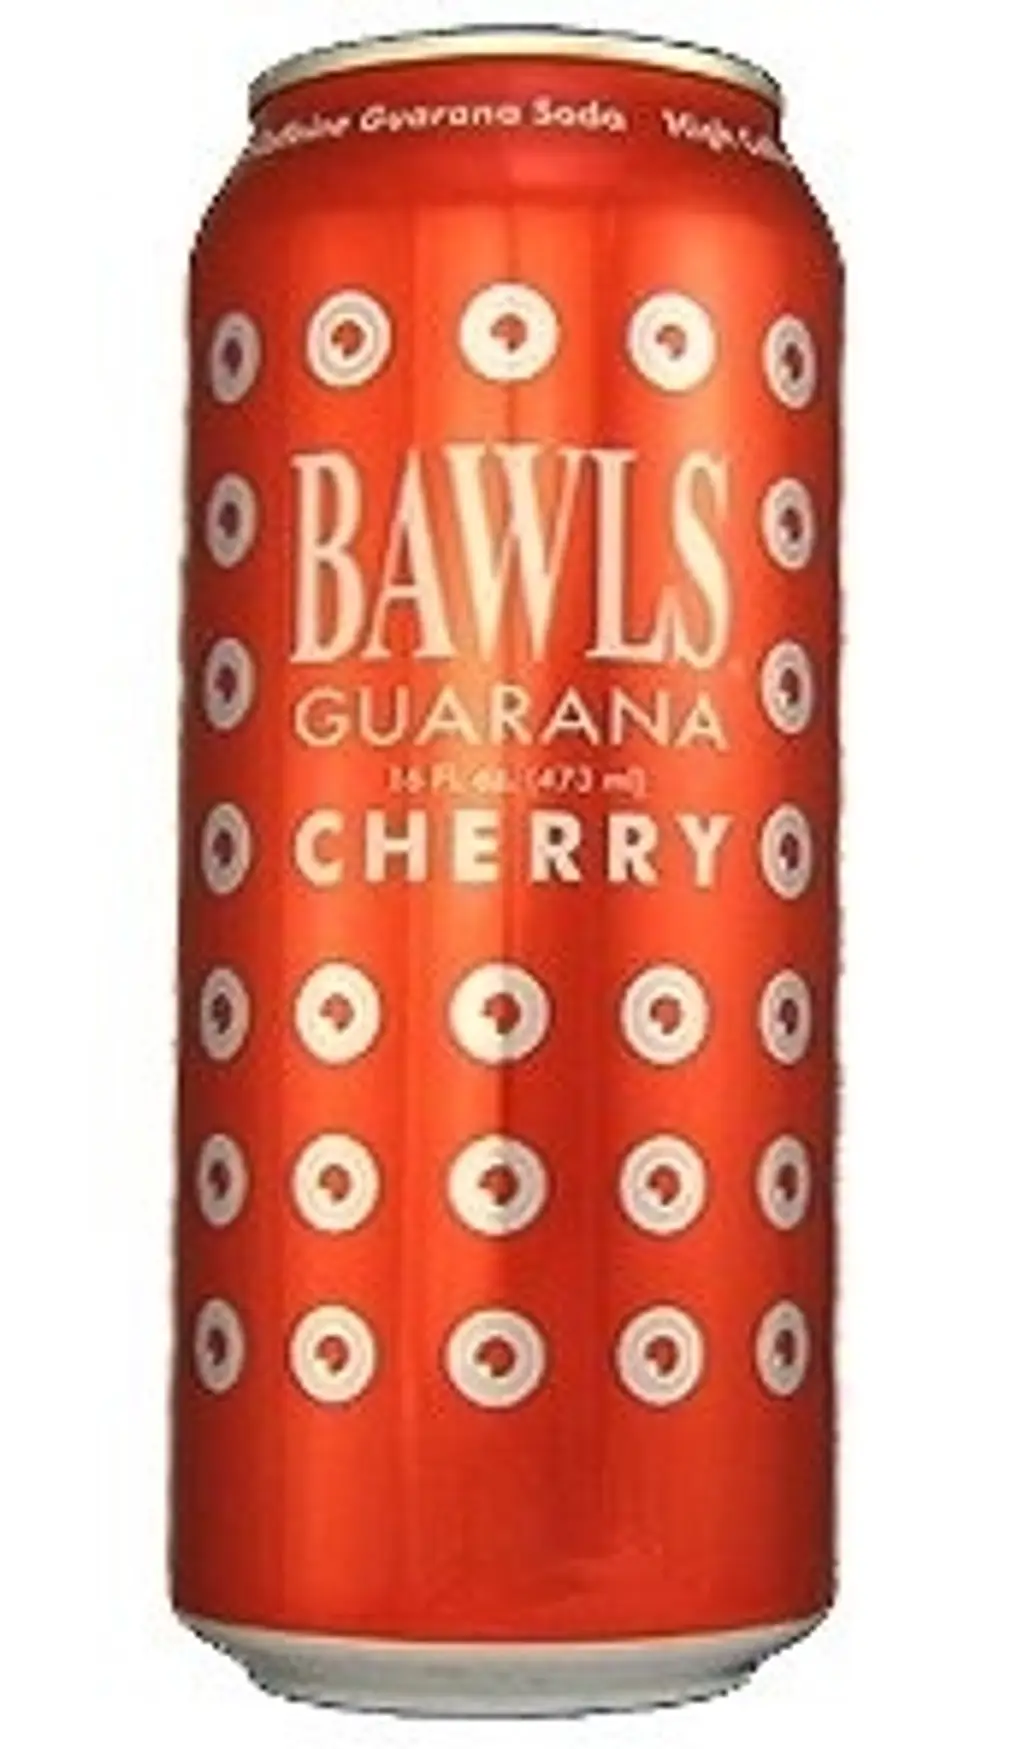 Bawls Guarana – Cherry